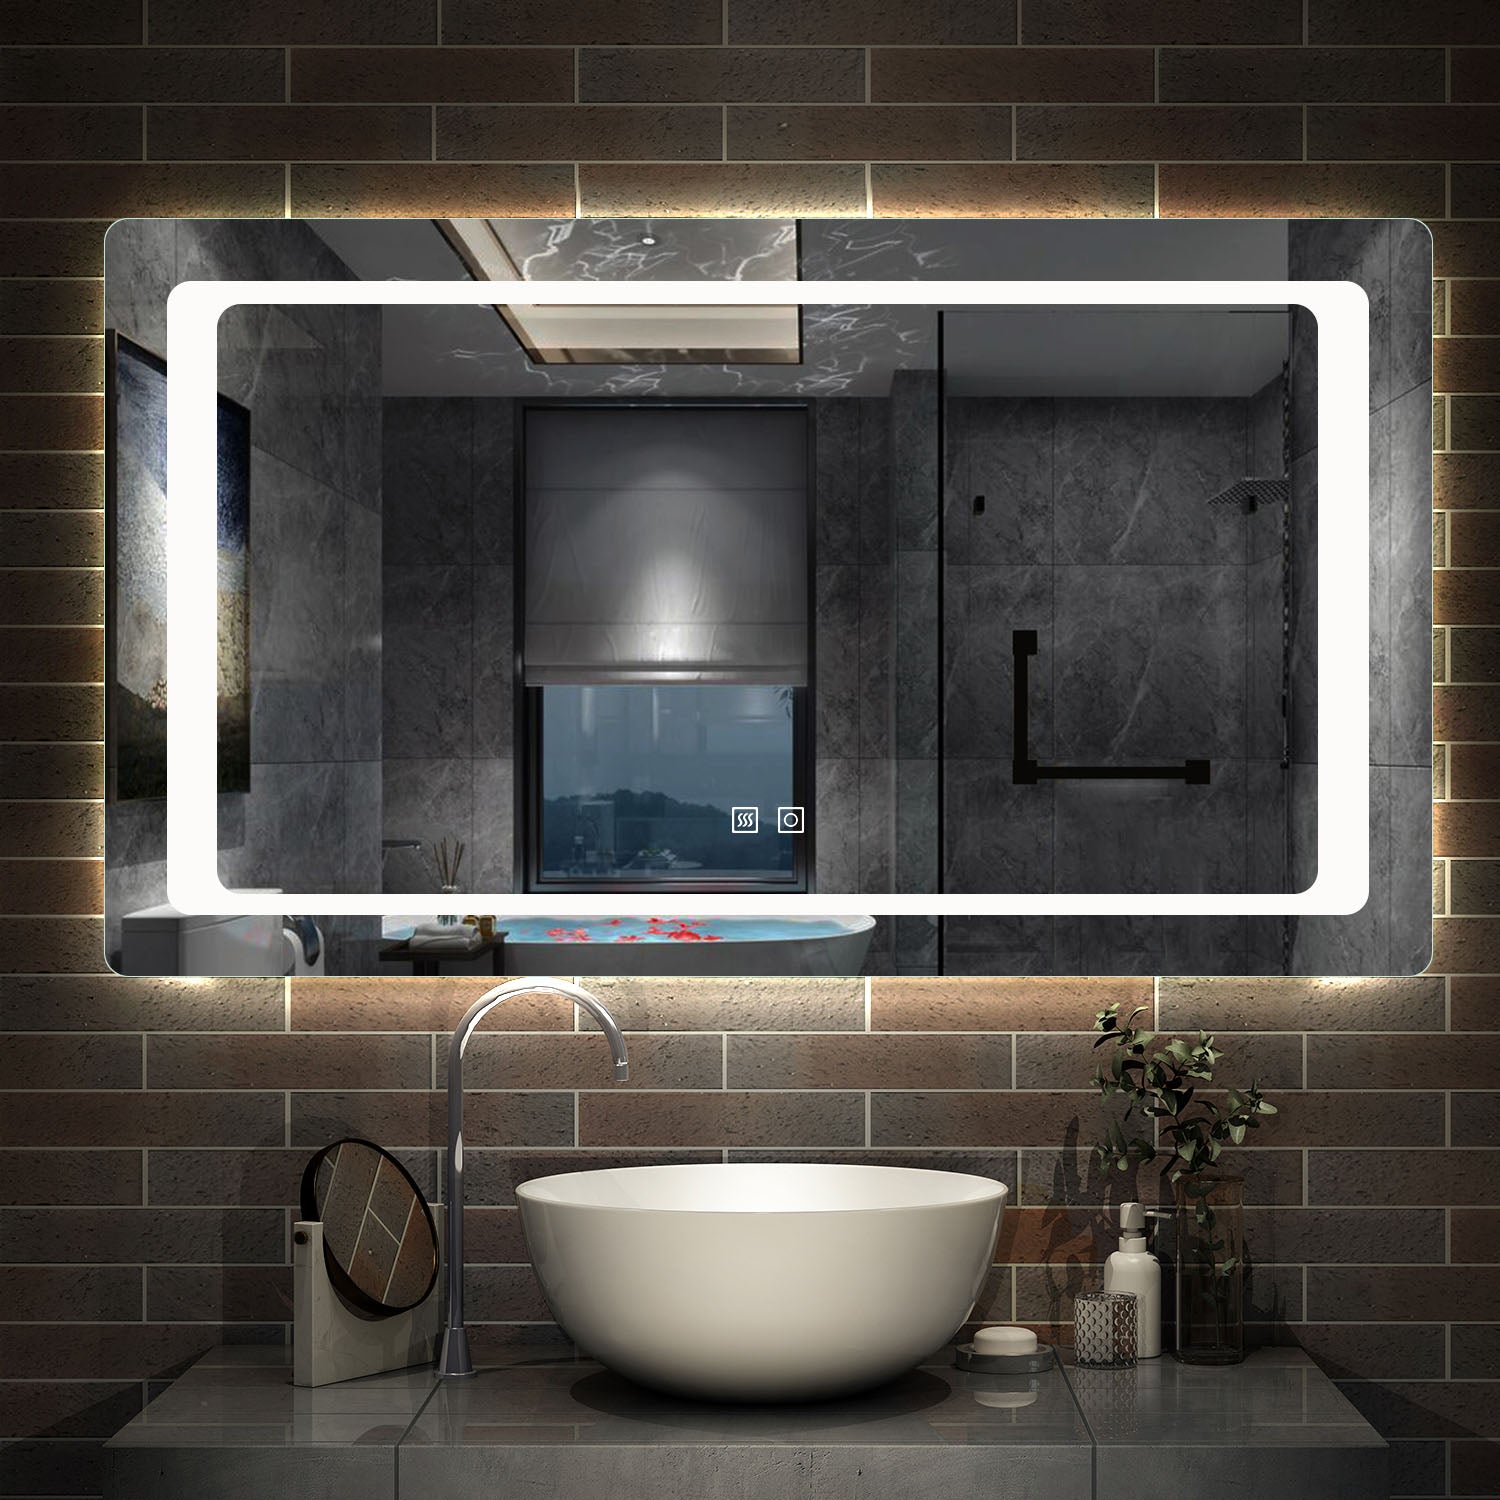 Espejo de baño con luz LED(Brillo LED Envolvente) / antivaho calefacta –  Aica Sanitarios España